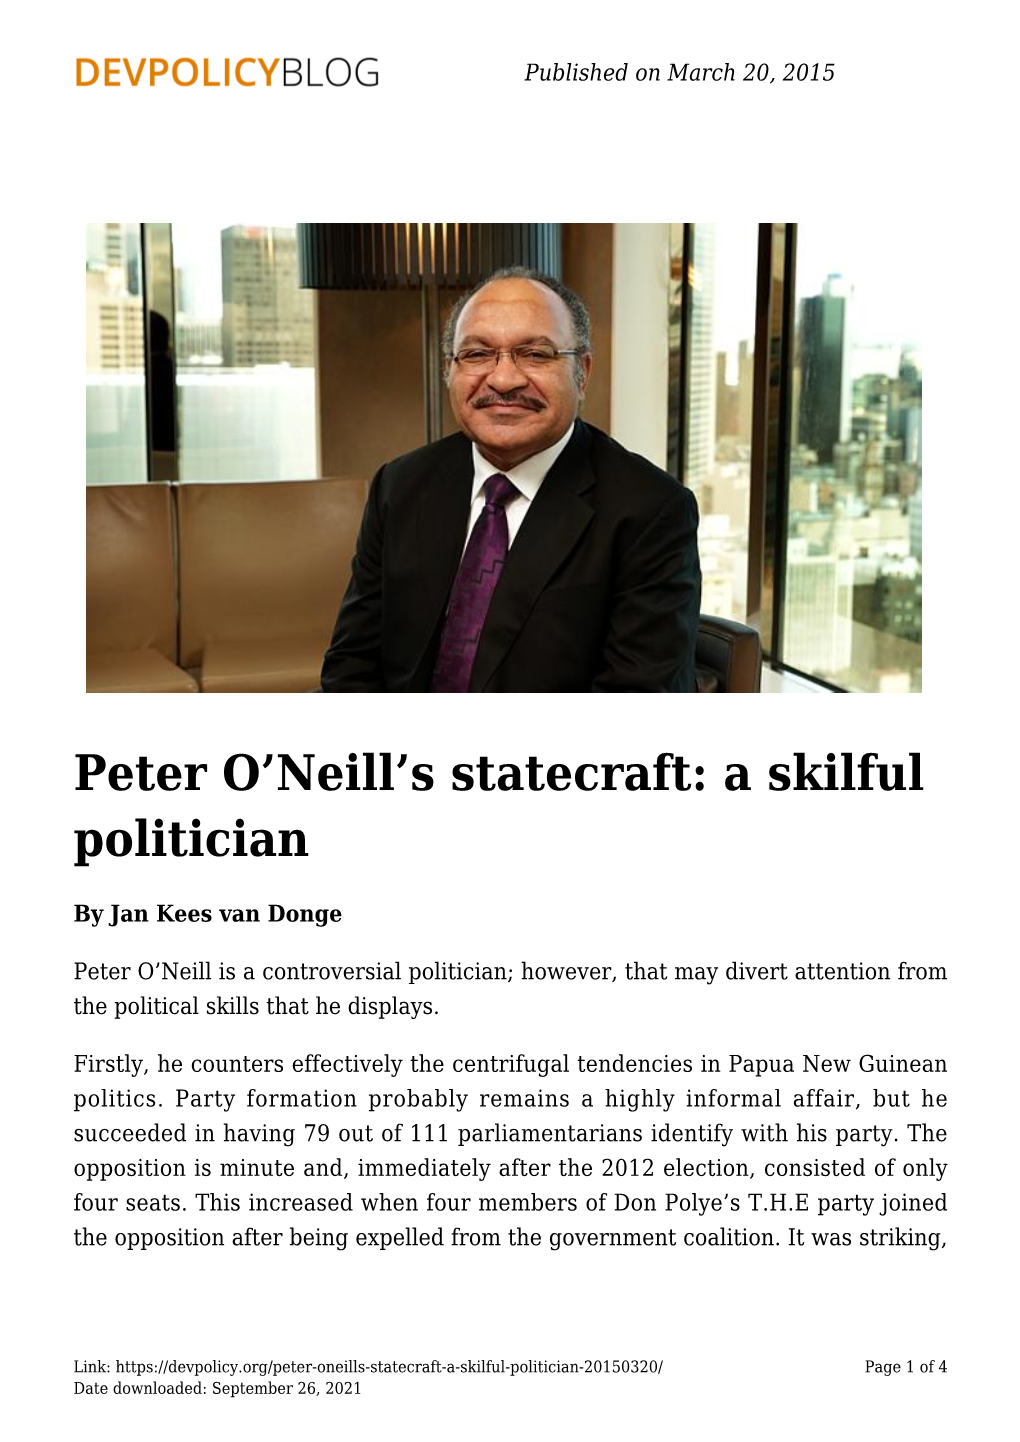 Peter O'neill's Statecraft: a Skilful Politician